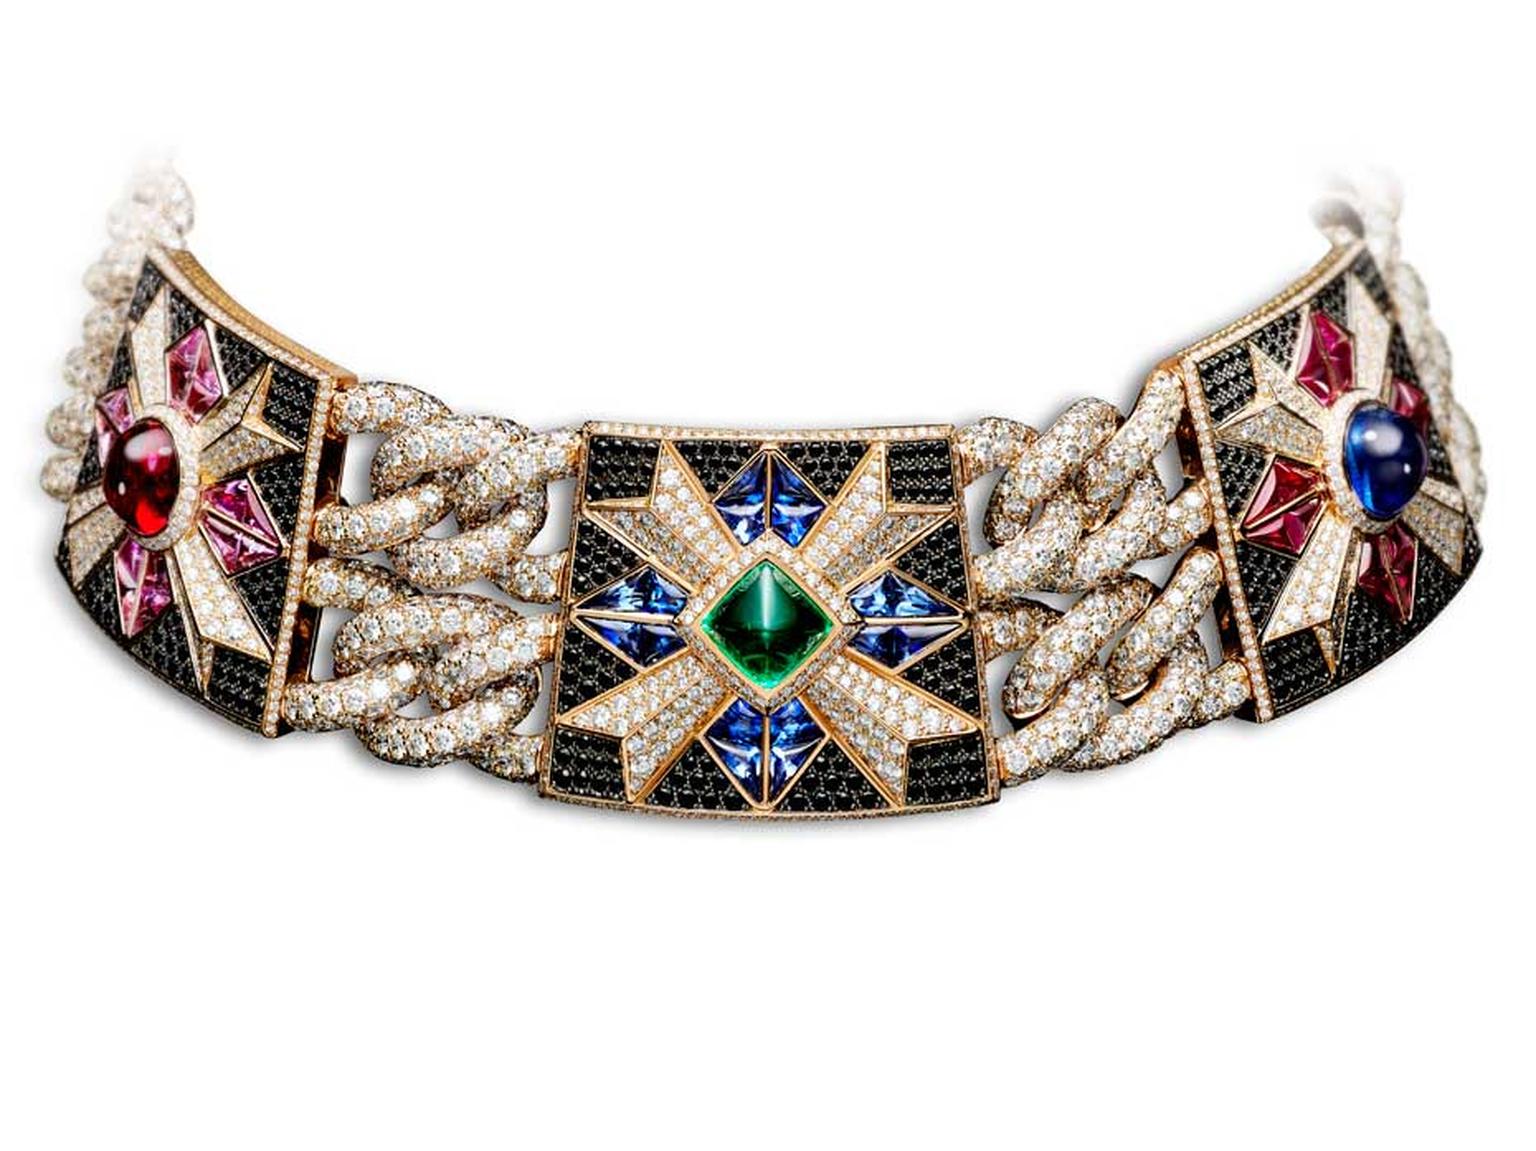 Giampiero Bodino Mosaic bracelet featuring layers of amethyst and citrine outlined by diamonds. Image: Laziz Hamani